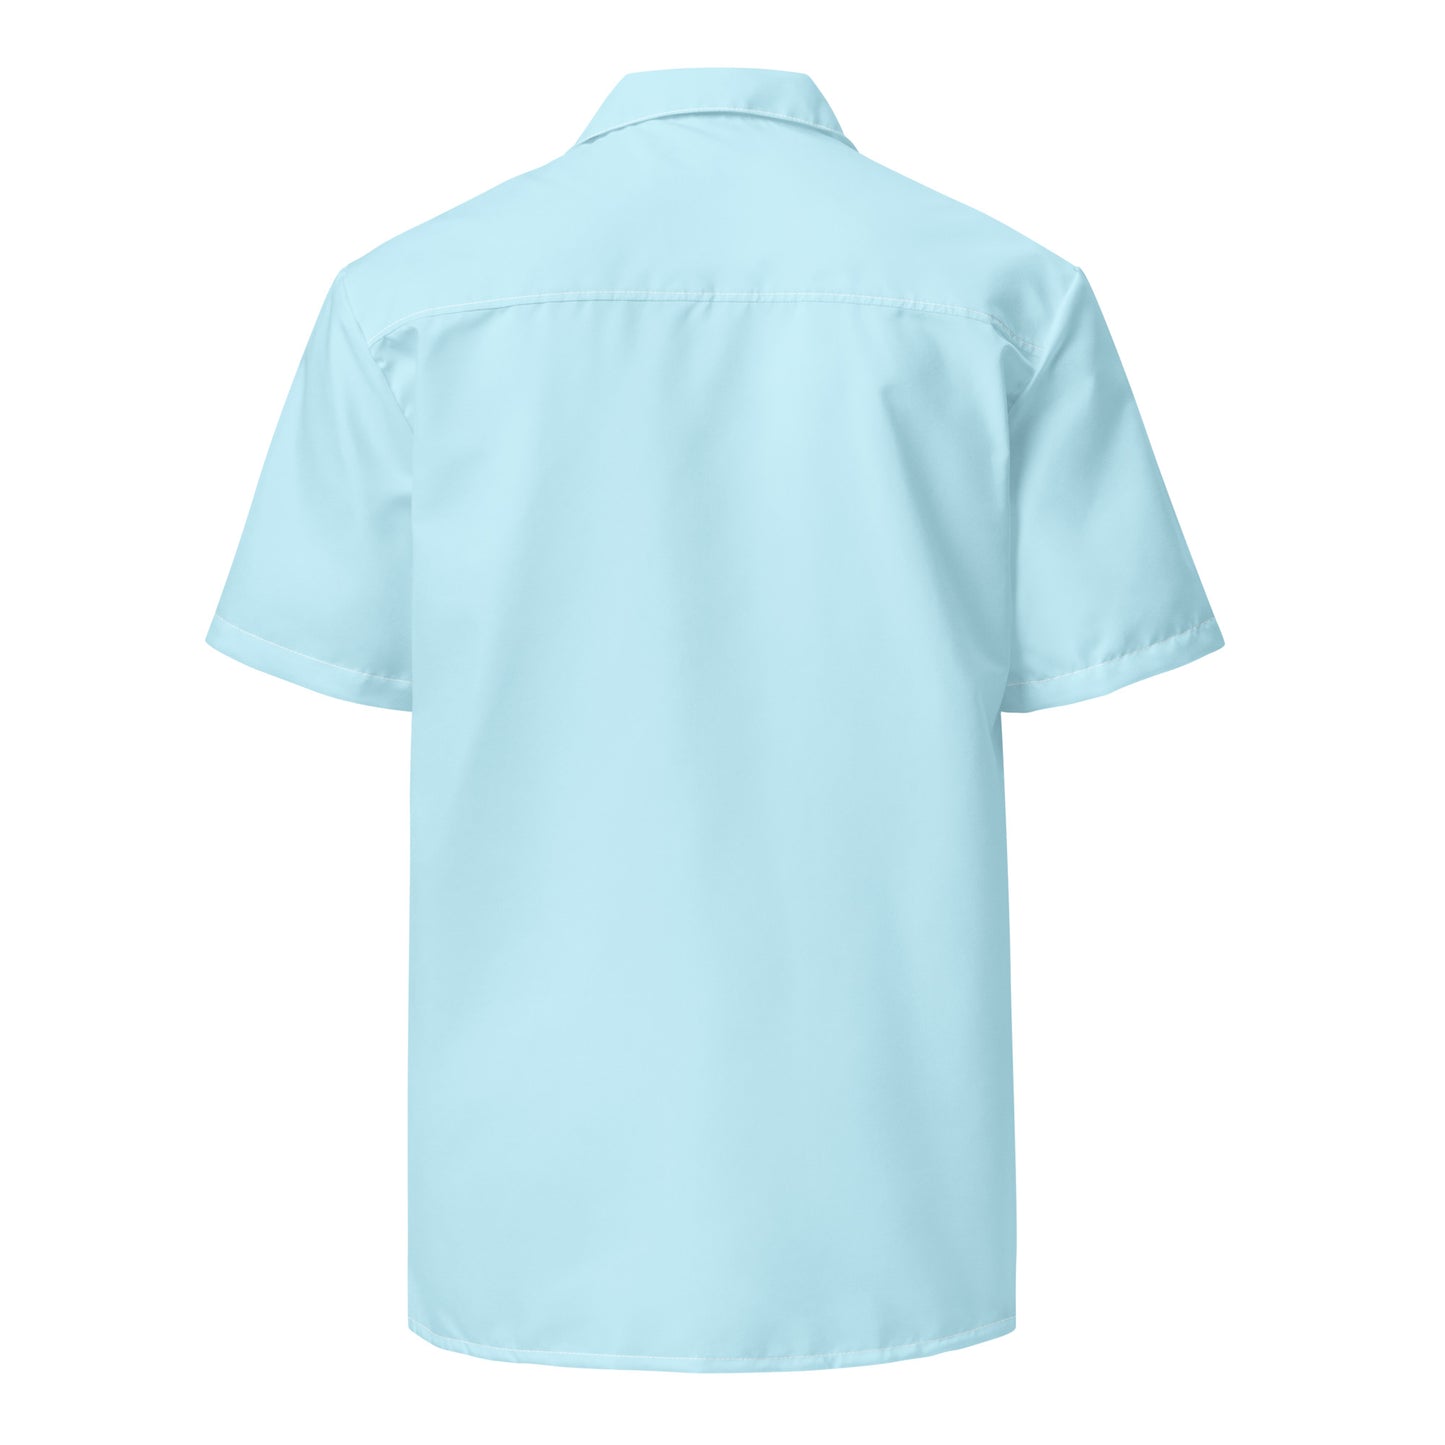 Bahama Water Blue button shirt - Tropical Seas Clothing 